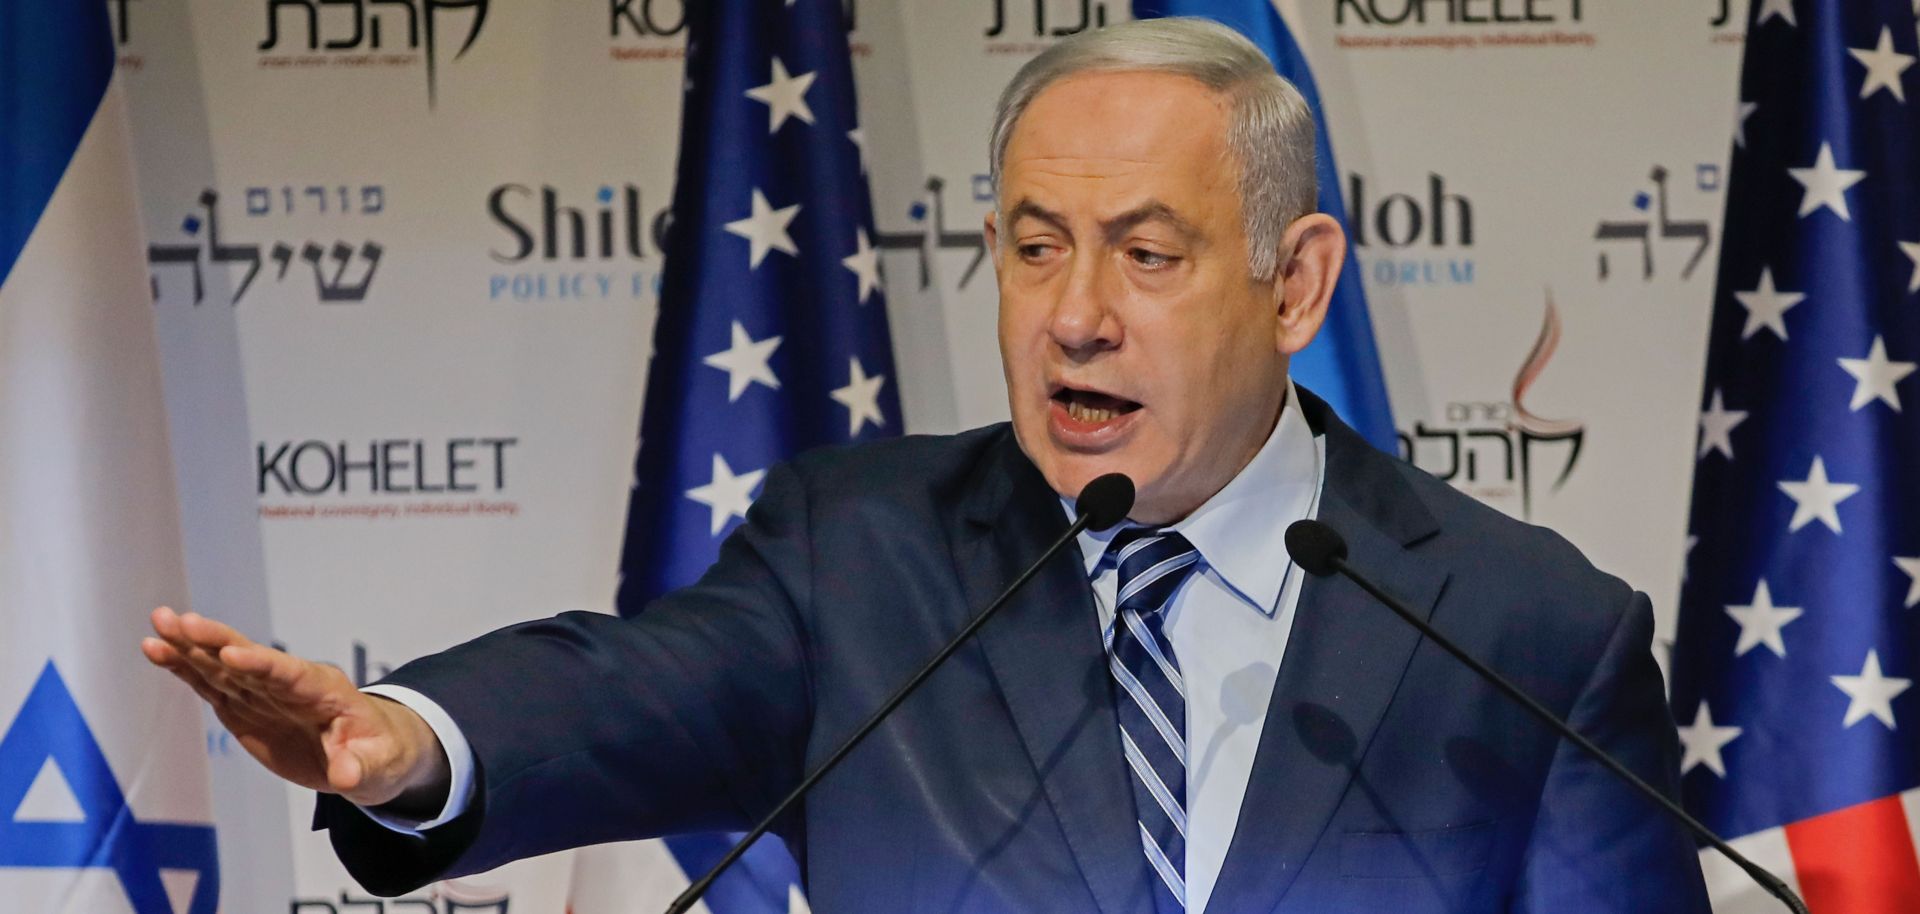 Israeli Prime Minister Benjamin Netanyahu speaks at the Kohelet Policy Forum conference in Jerusalem on Jan. 8, 2020.